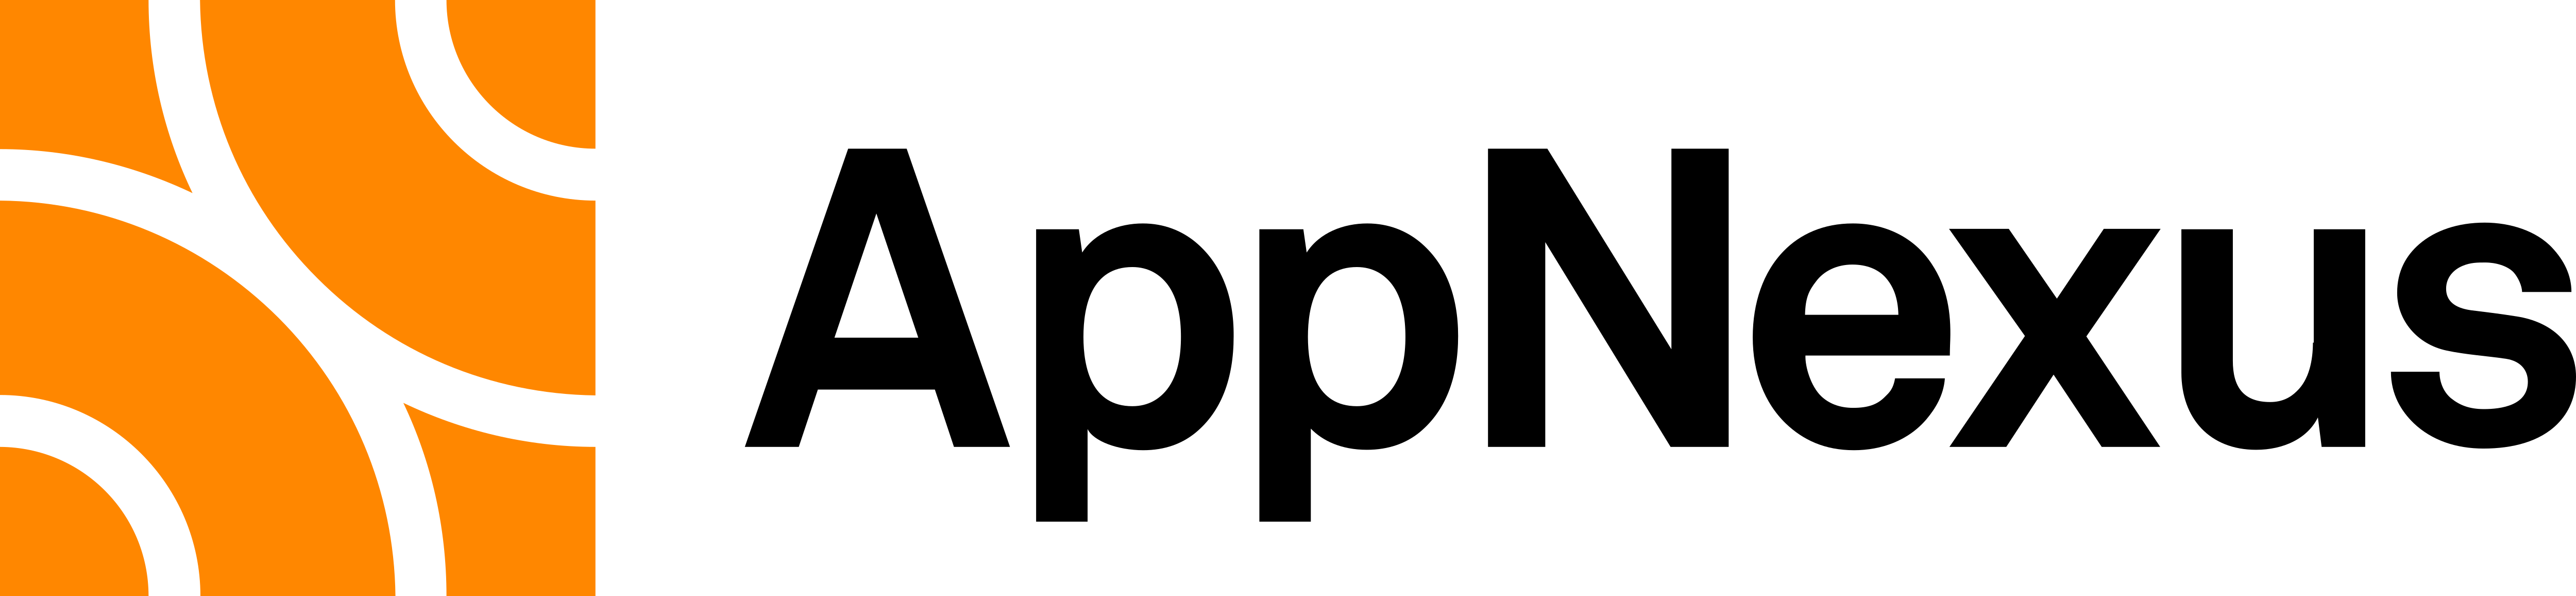 Appnexus Logo